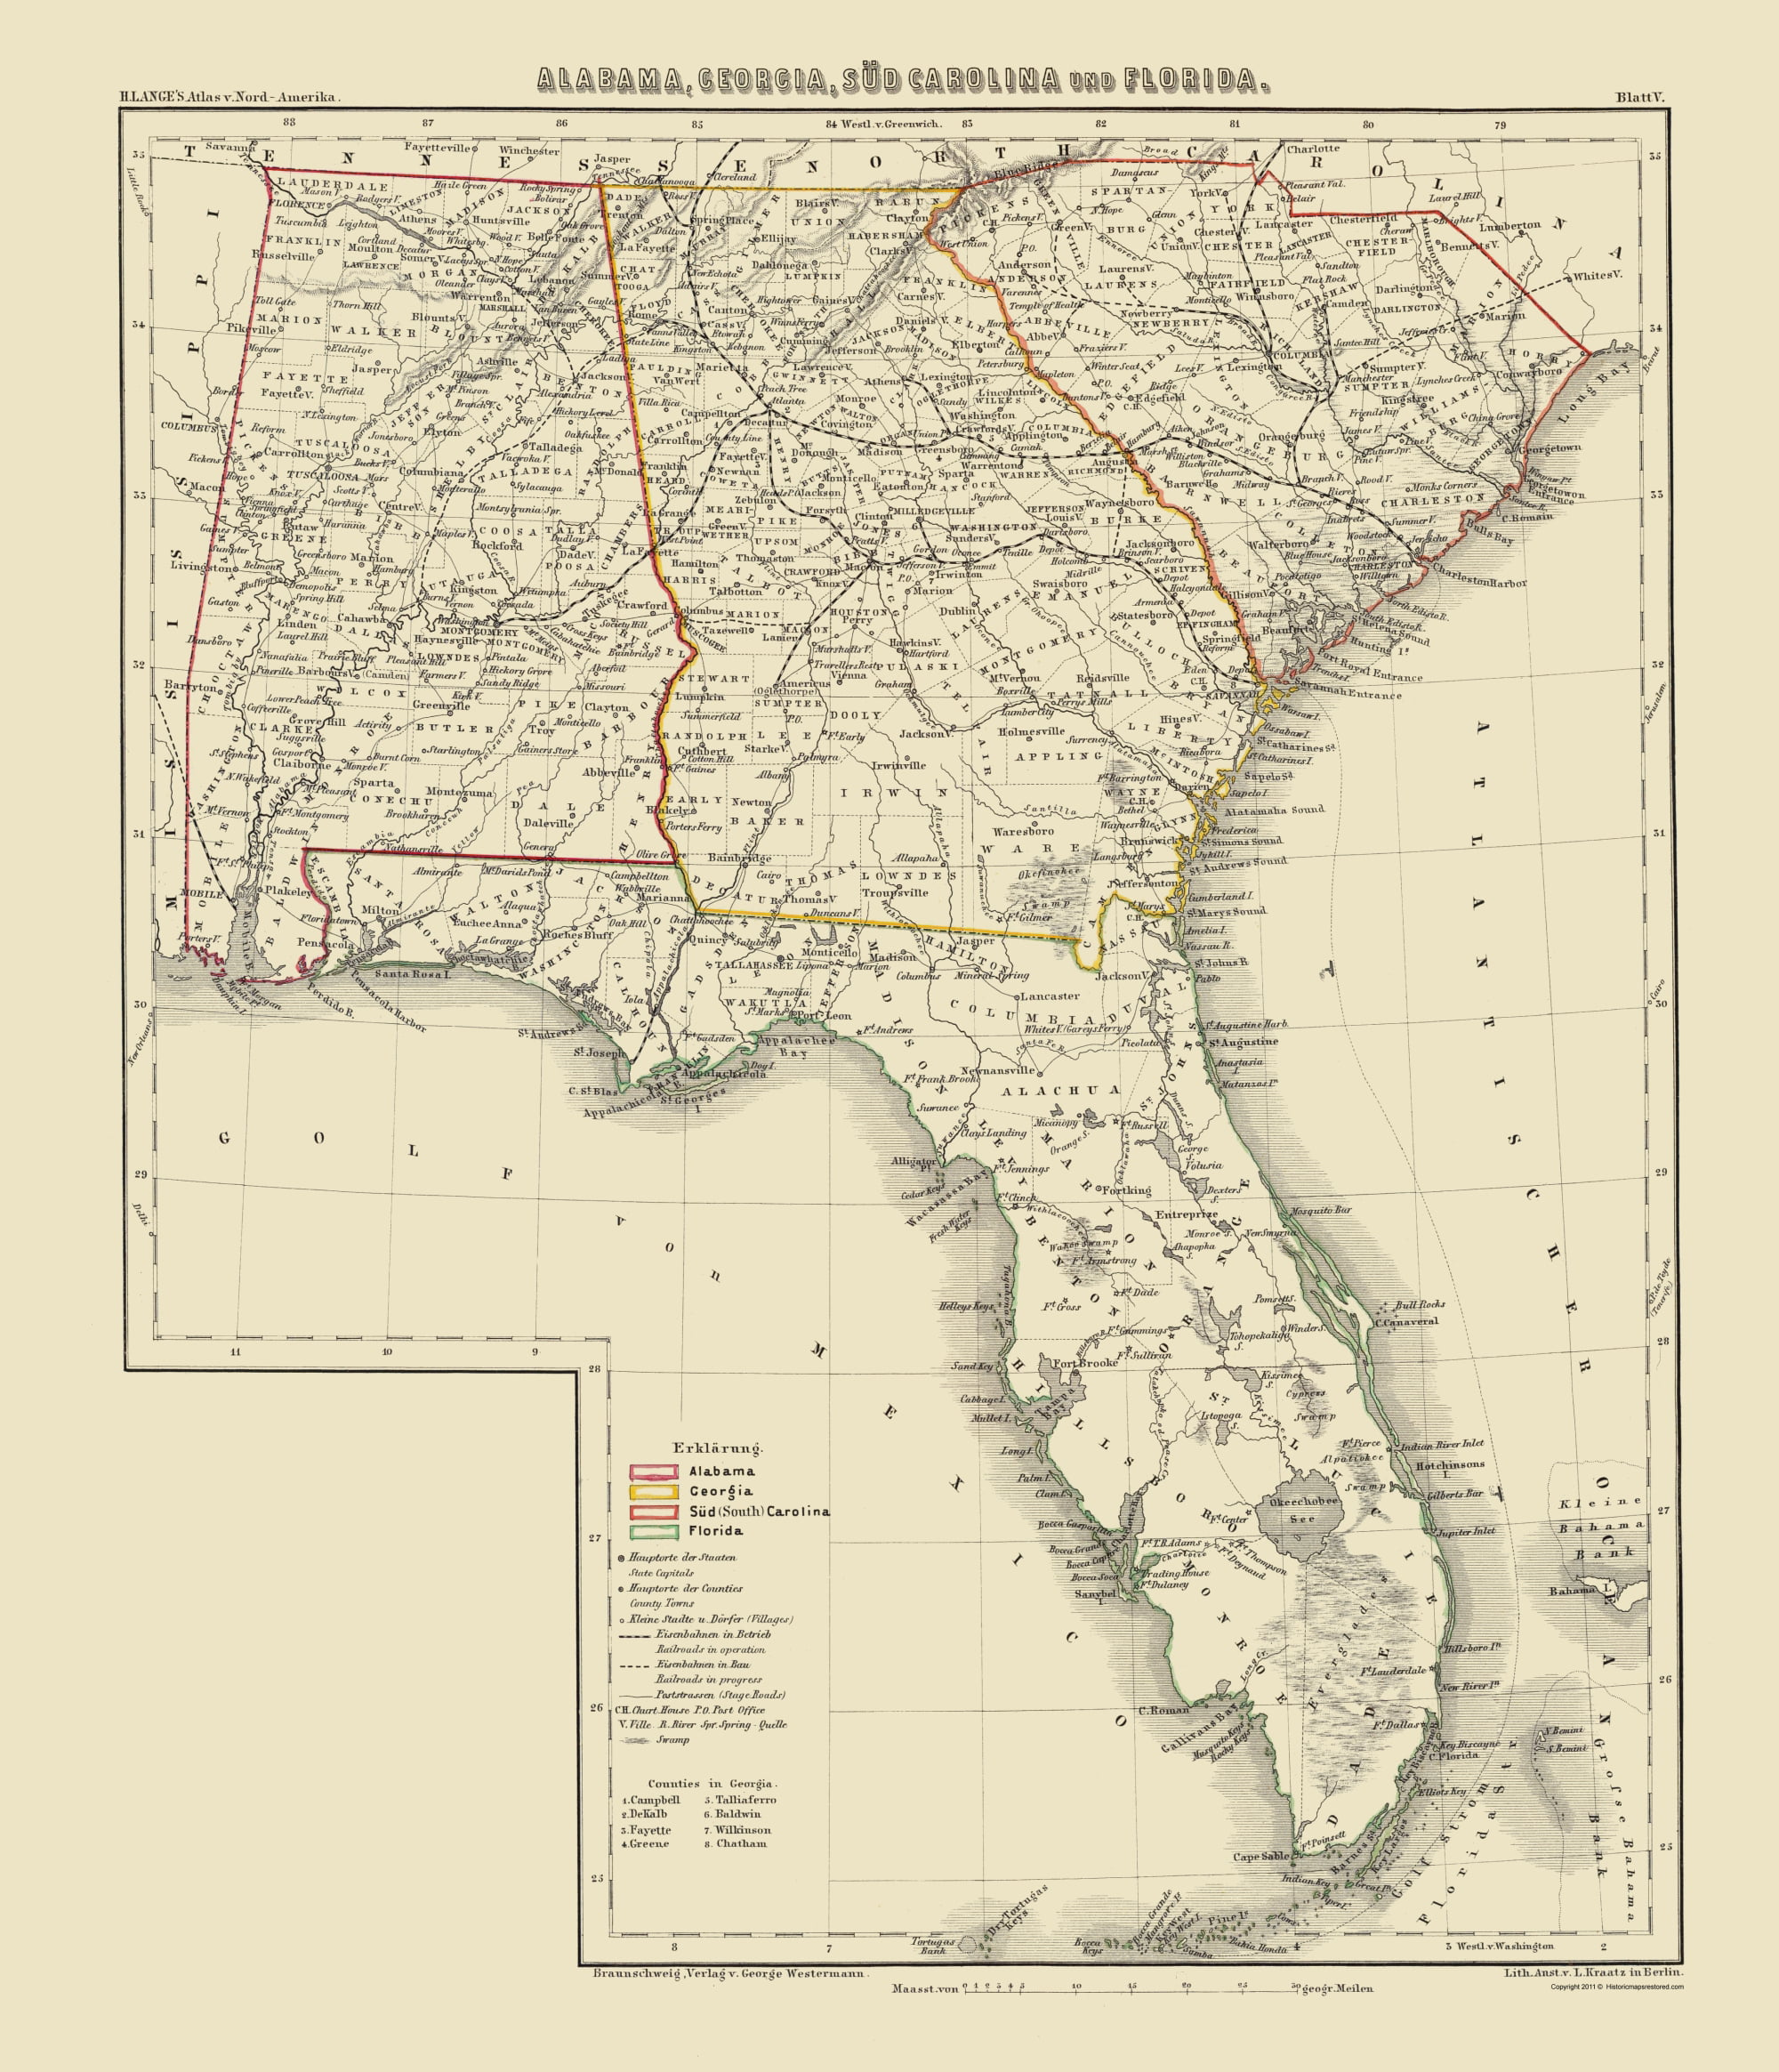 Alabama Georgia South Carolina Florida 1854 23 X 26 Walmart 